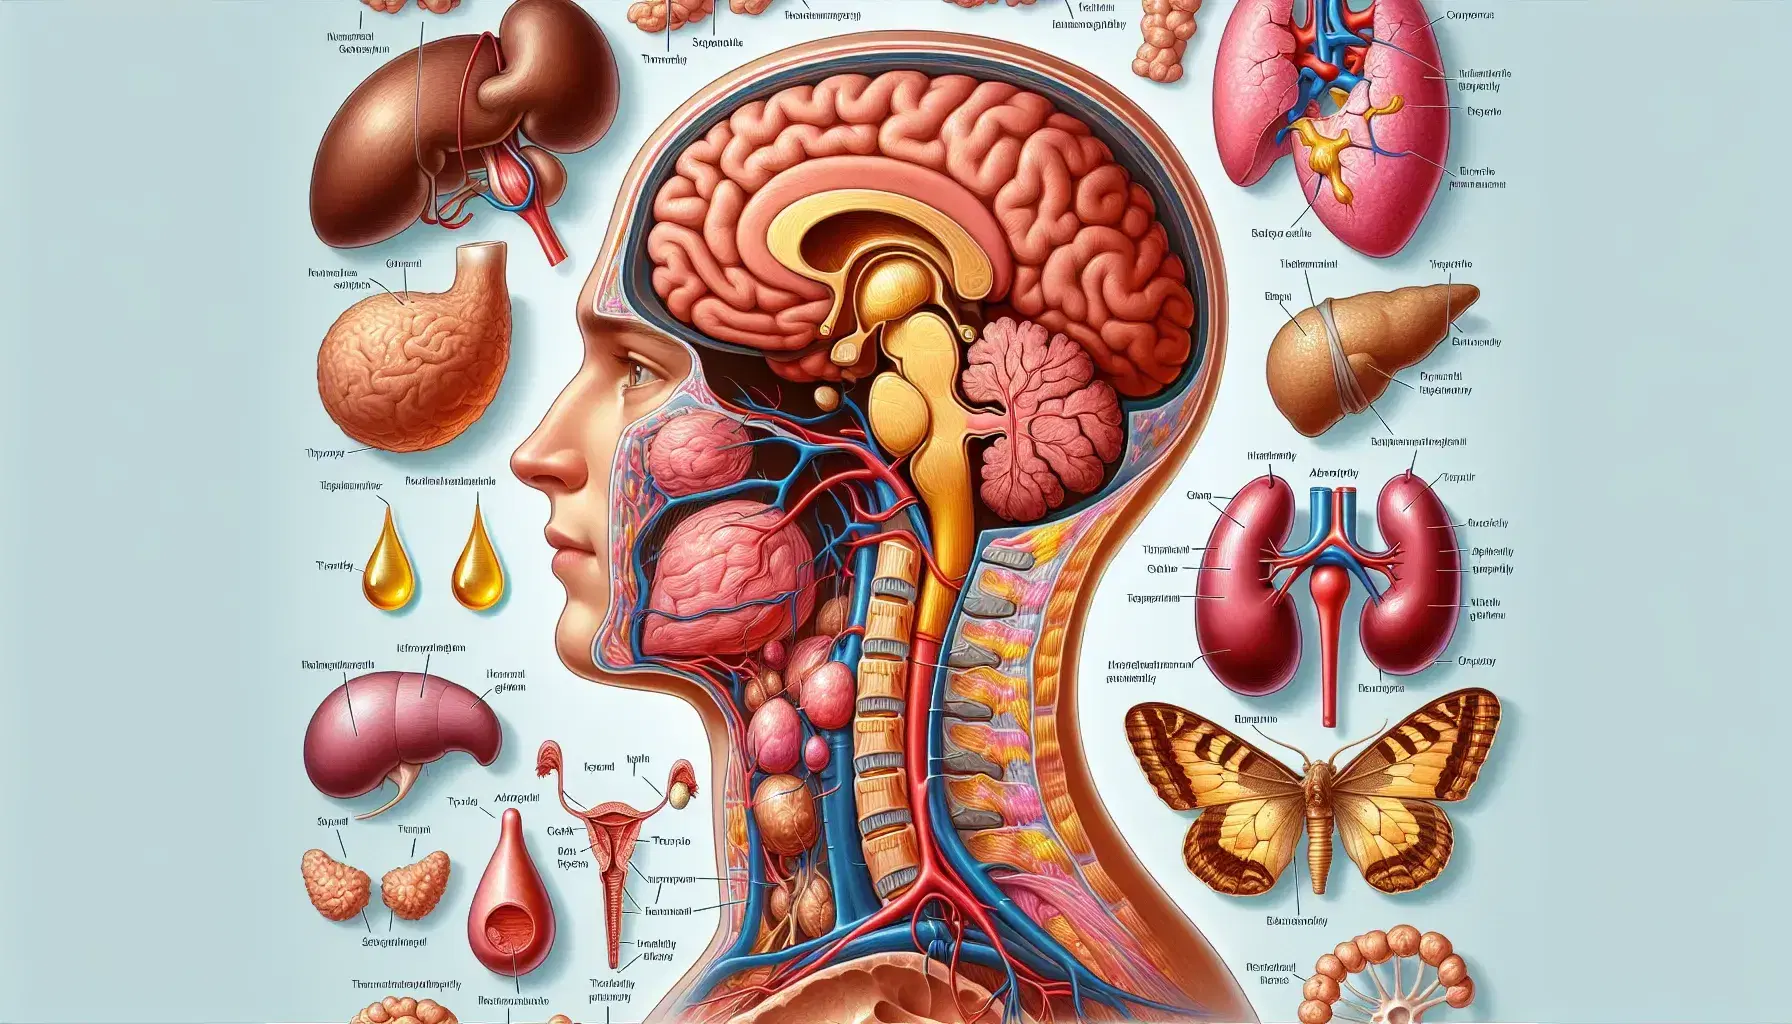 Representación anatómica colorida del sistema neuroendocrino humano, mostrando cerebro, hipotálamo, glándula pituitaria, tiroides, glándulas suprarrenales y órganos reproductivos.